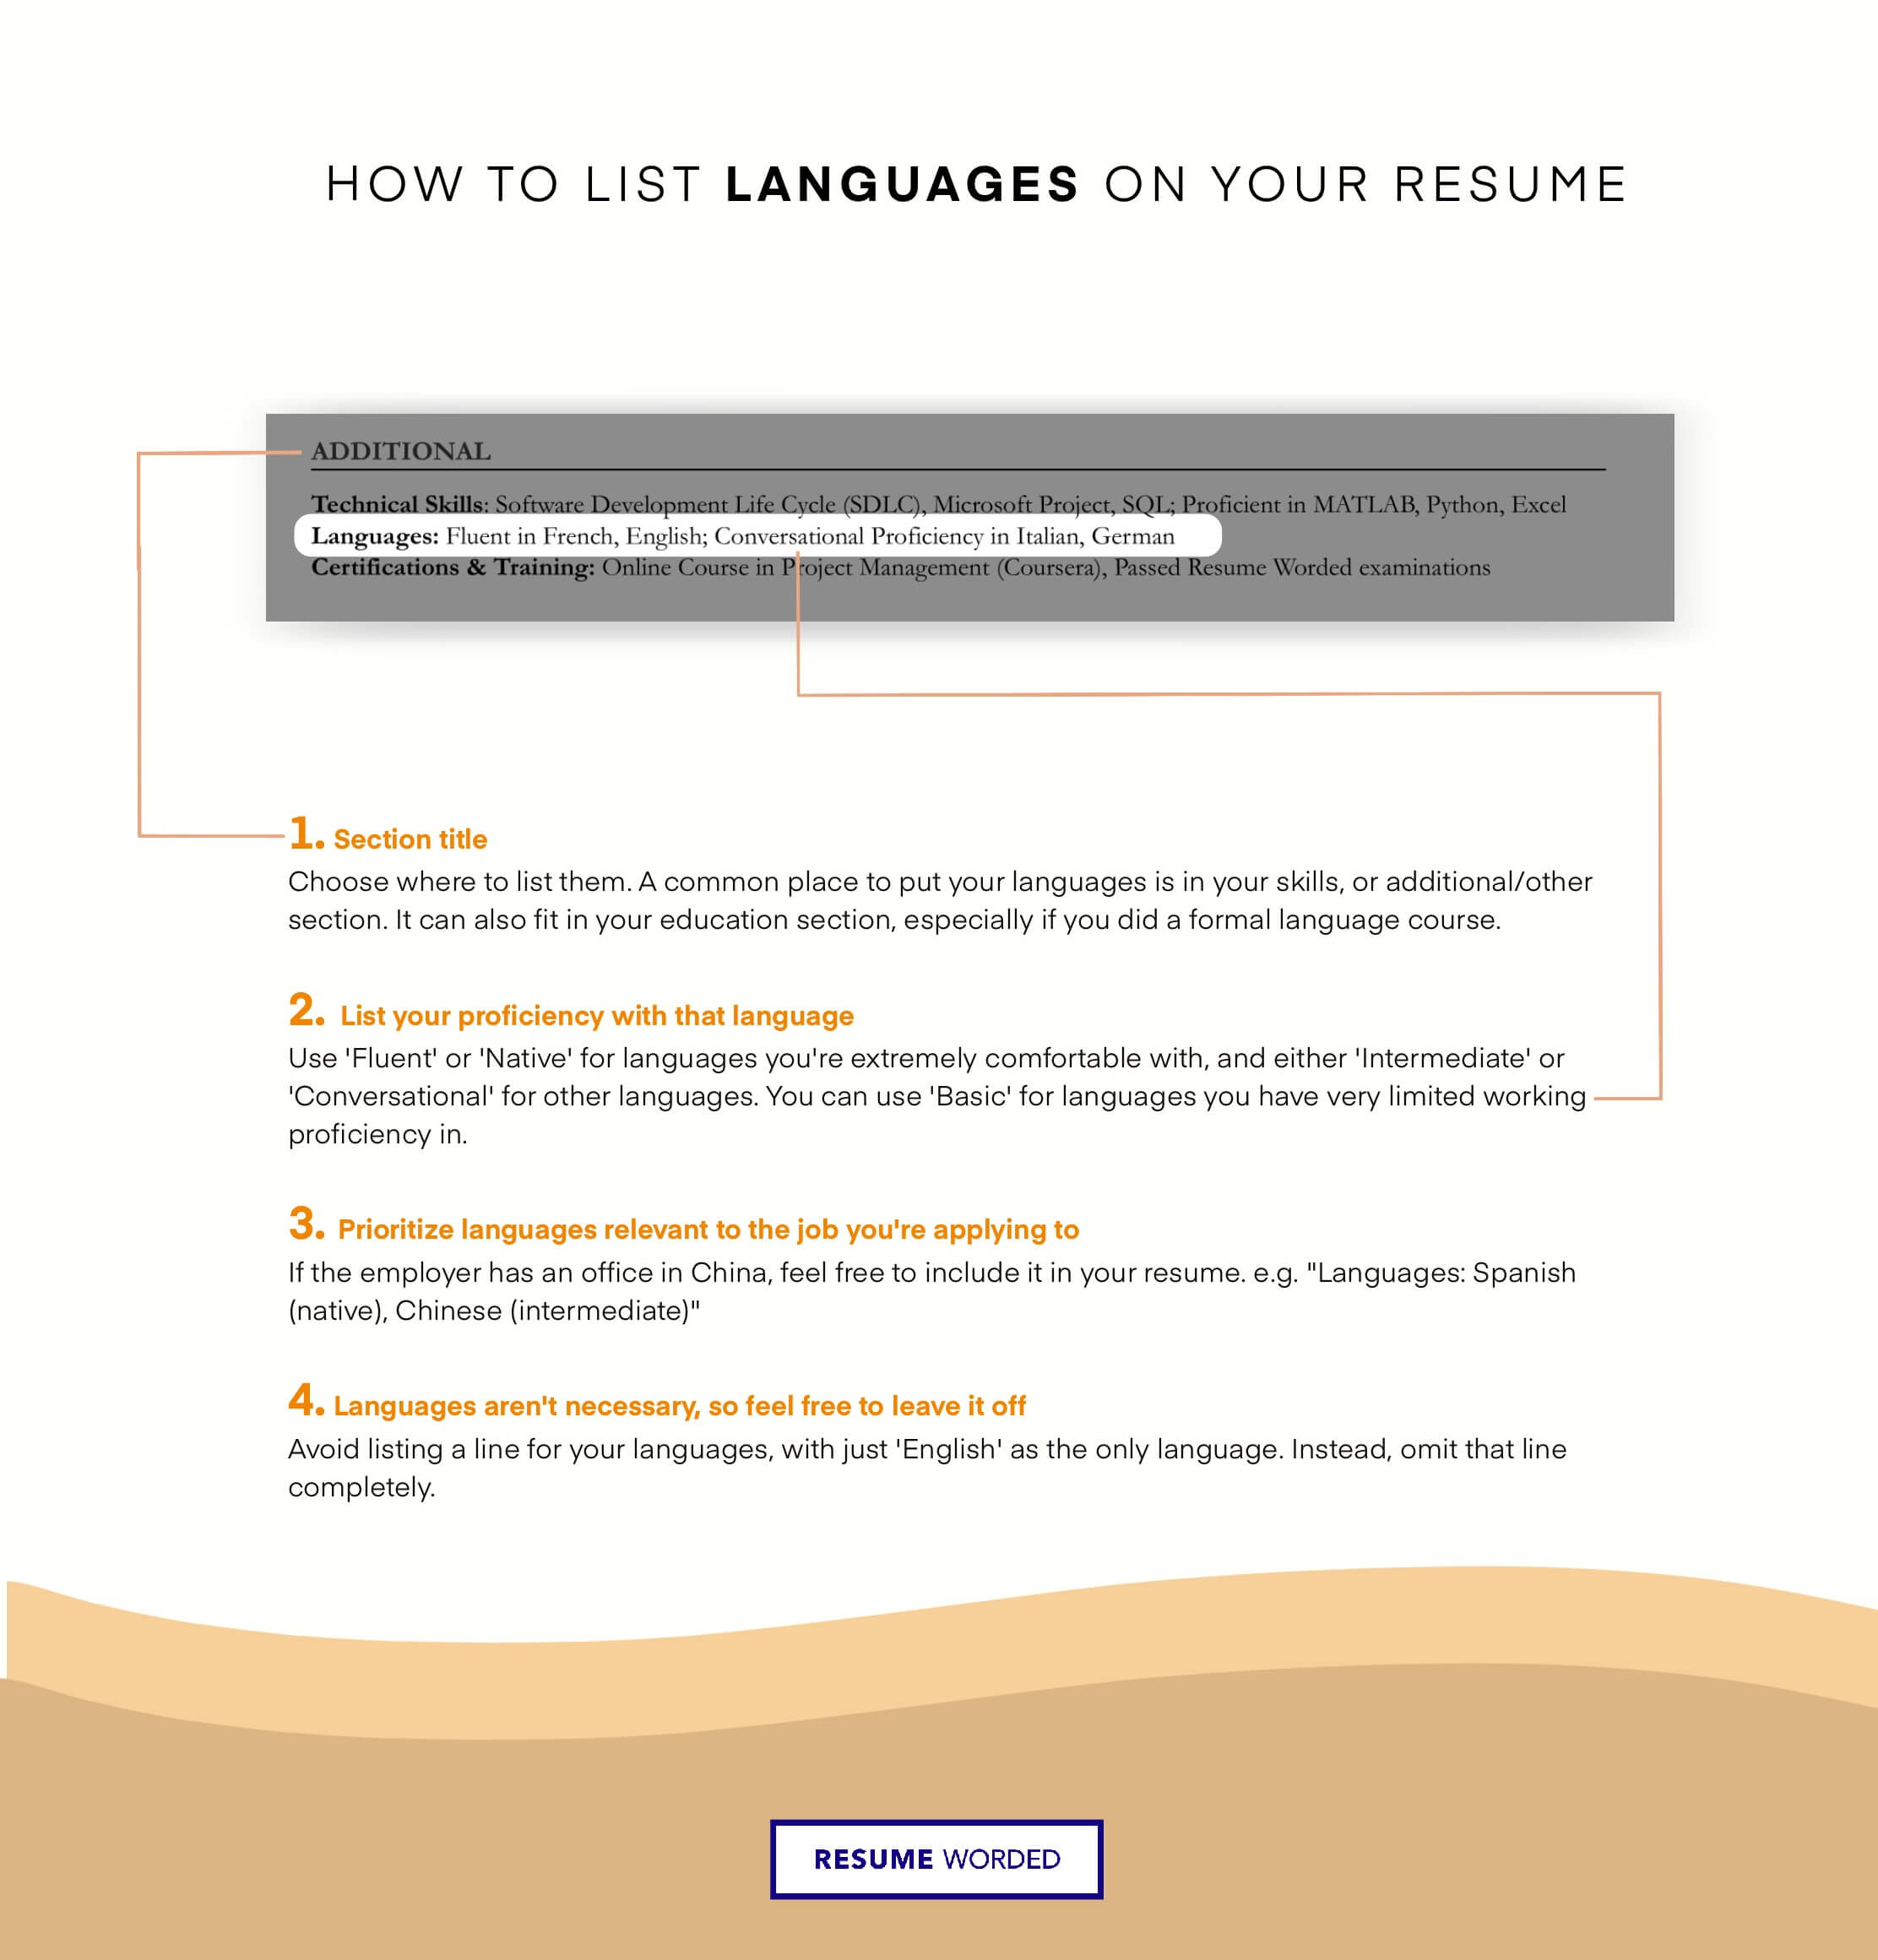 Show your command over tech languages - IT Specialist CV